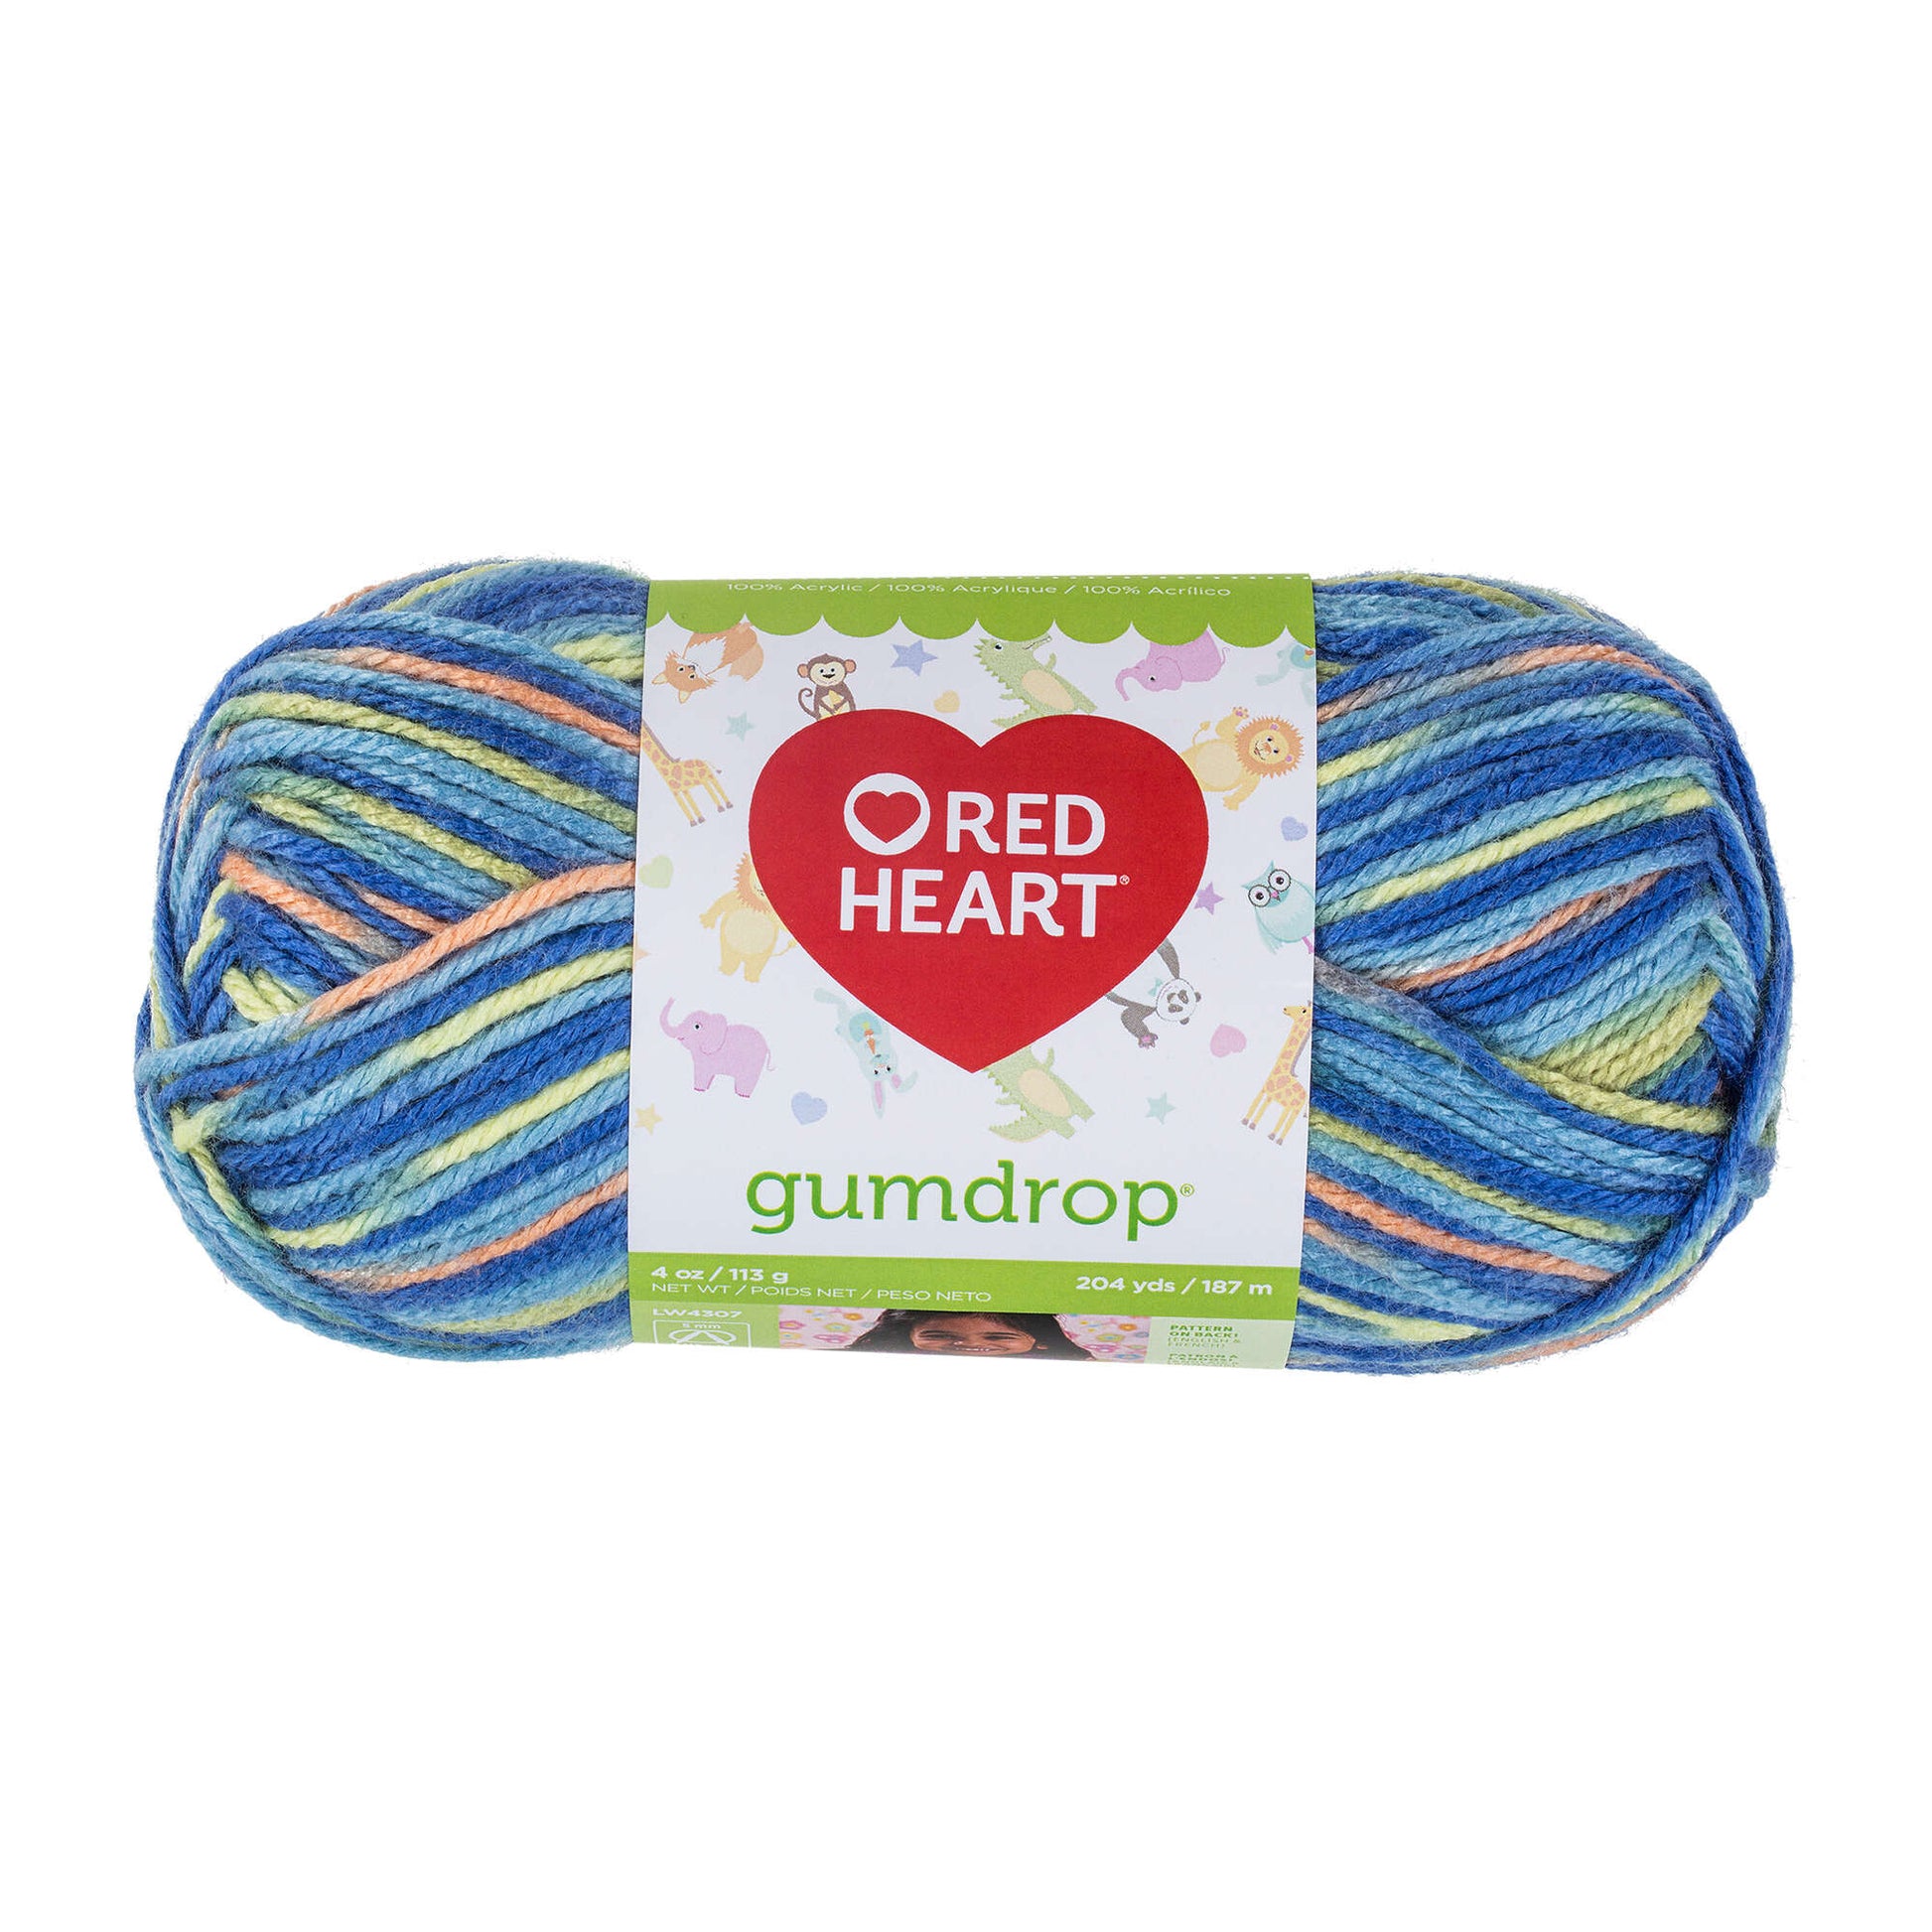 Red Heart Gumdrop Yarn - Discontinued shades Blueberry